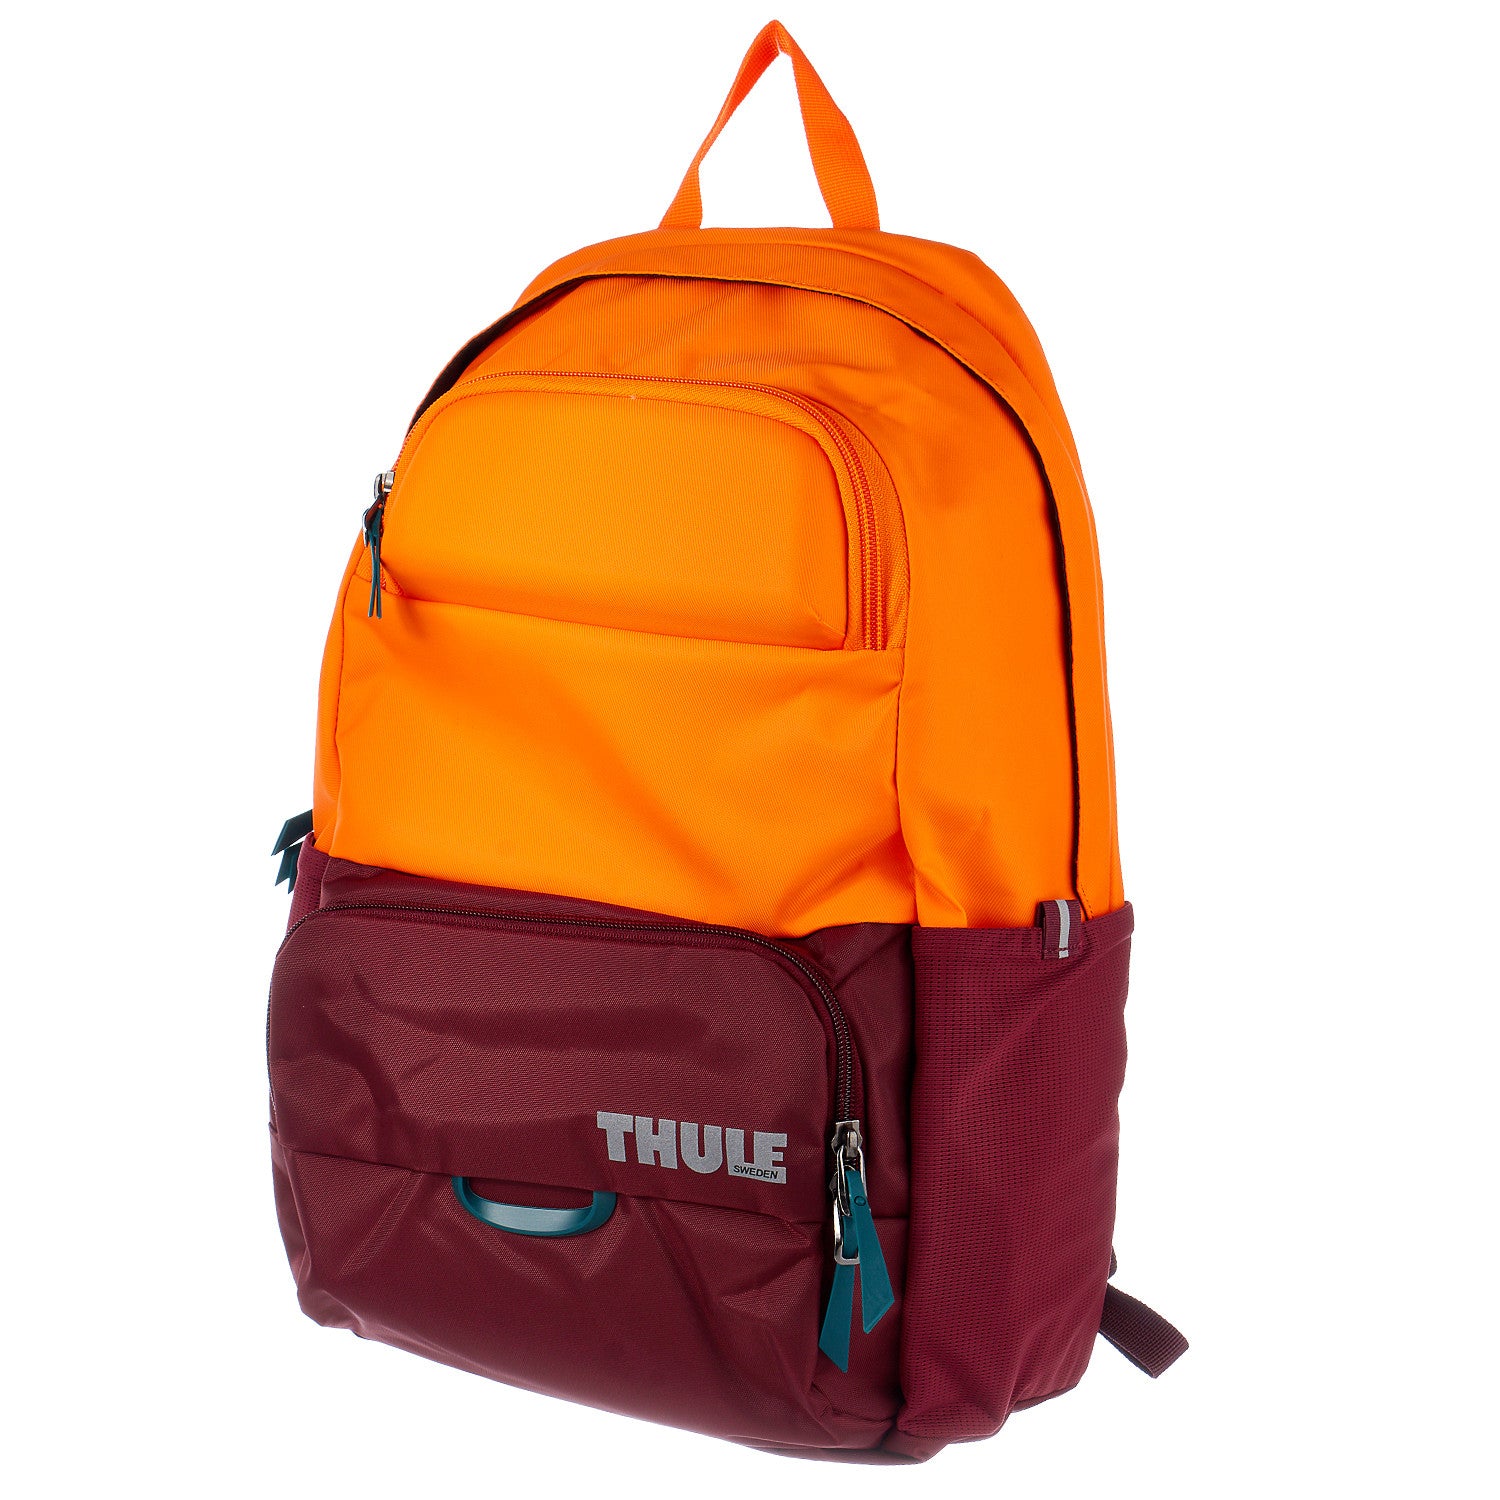 Thule Subterra Backpack 30L - Shoplifestyle